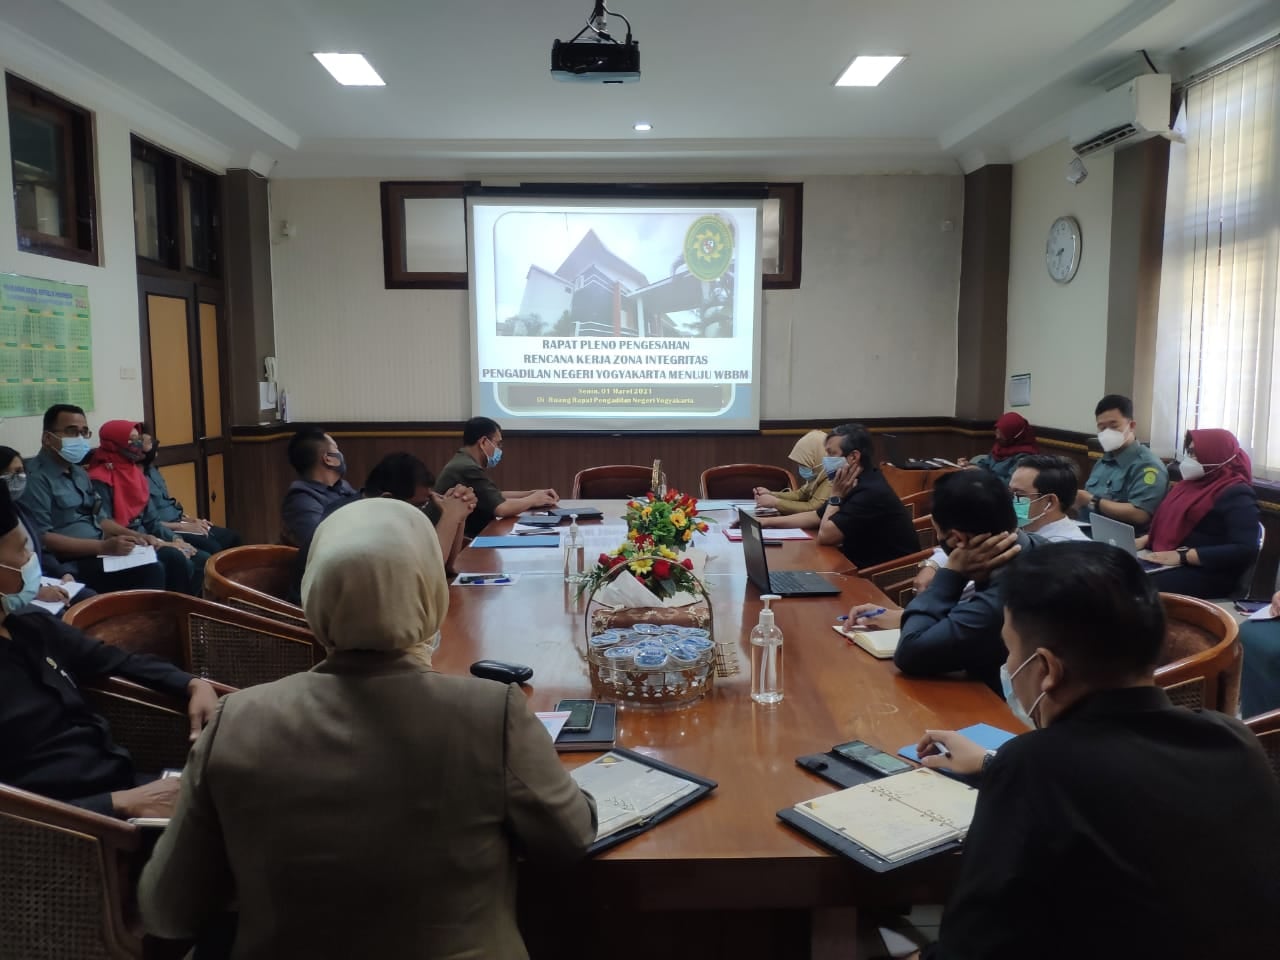 Rapat Pleno Pengesahan Rencana Aksi/Rencana Kerja Pembangunan Zona Integritas Menuju WBBM pada Pengadilan Negeri Yogyakarta